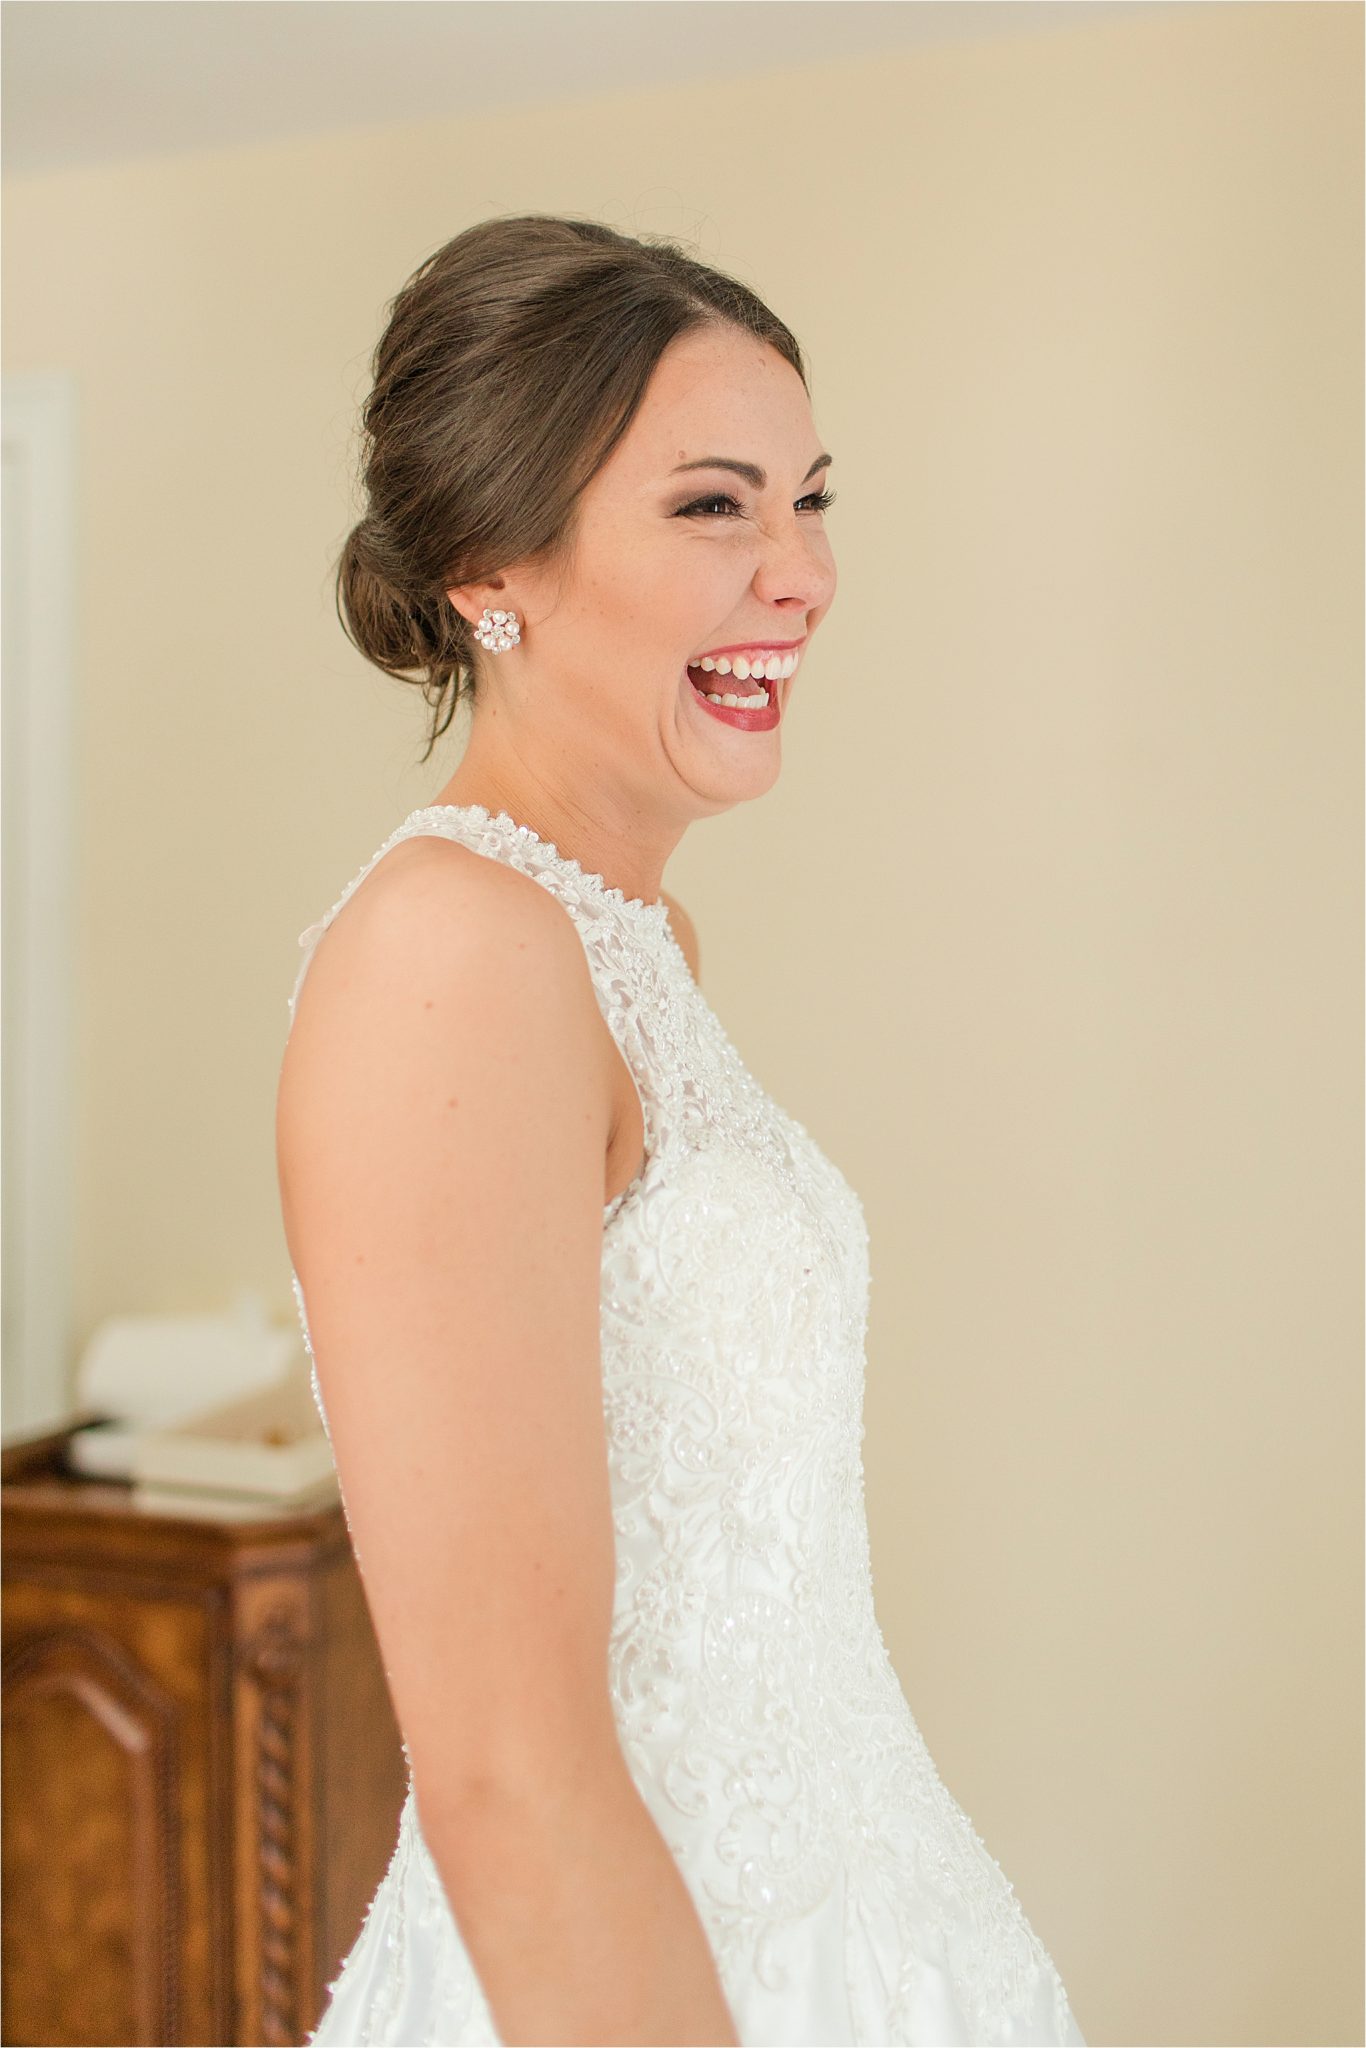 Sonnet House, Birmingham Alabama Wedding Photographer, Bridal portrait, Wedding dress reveal